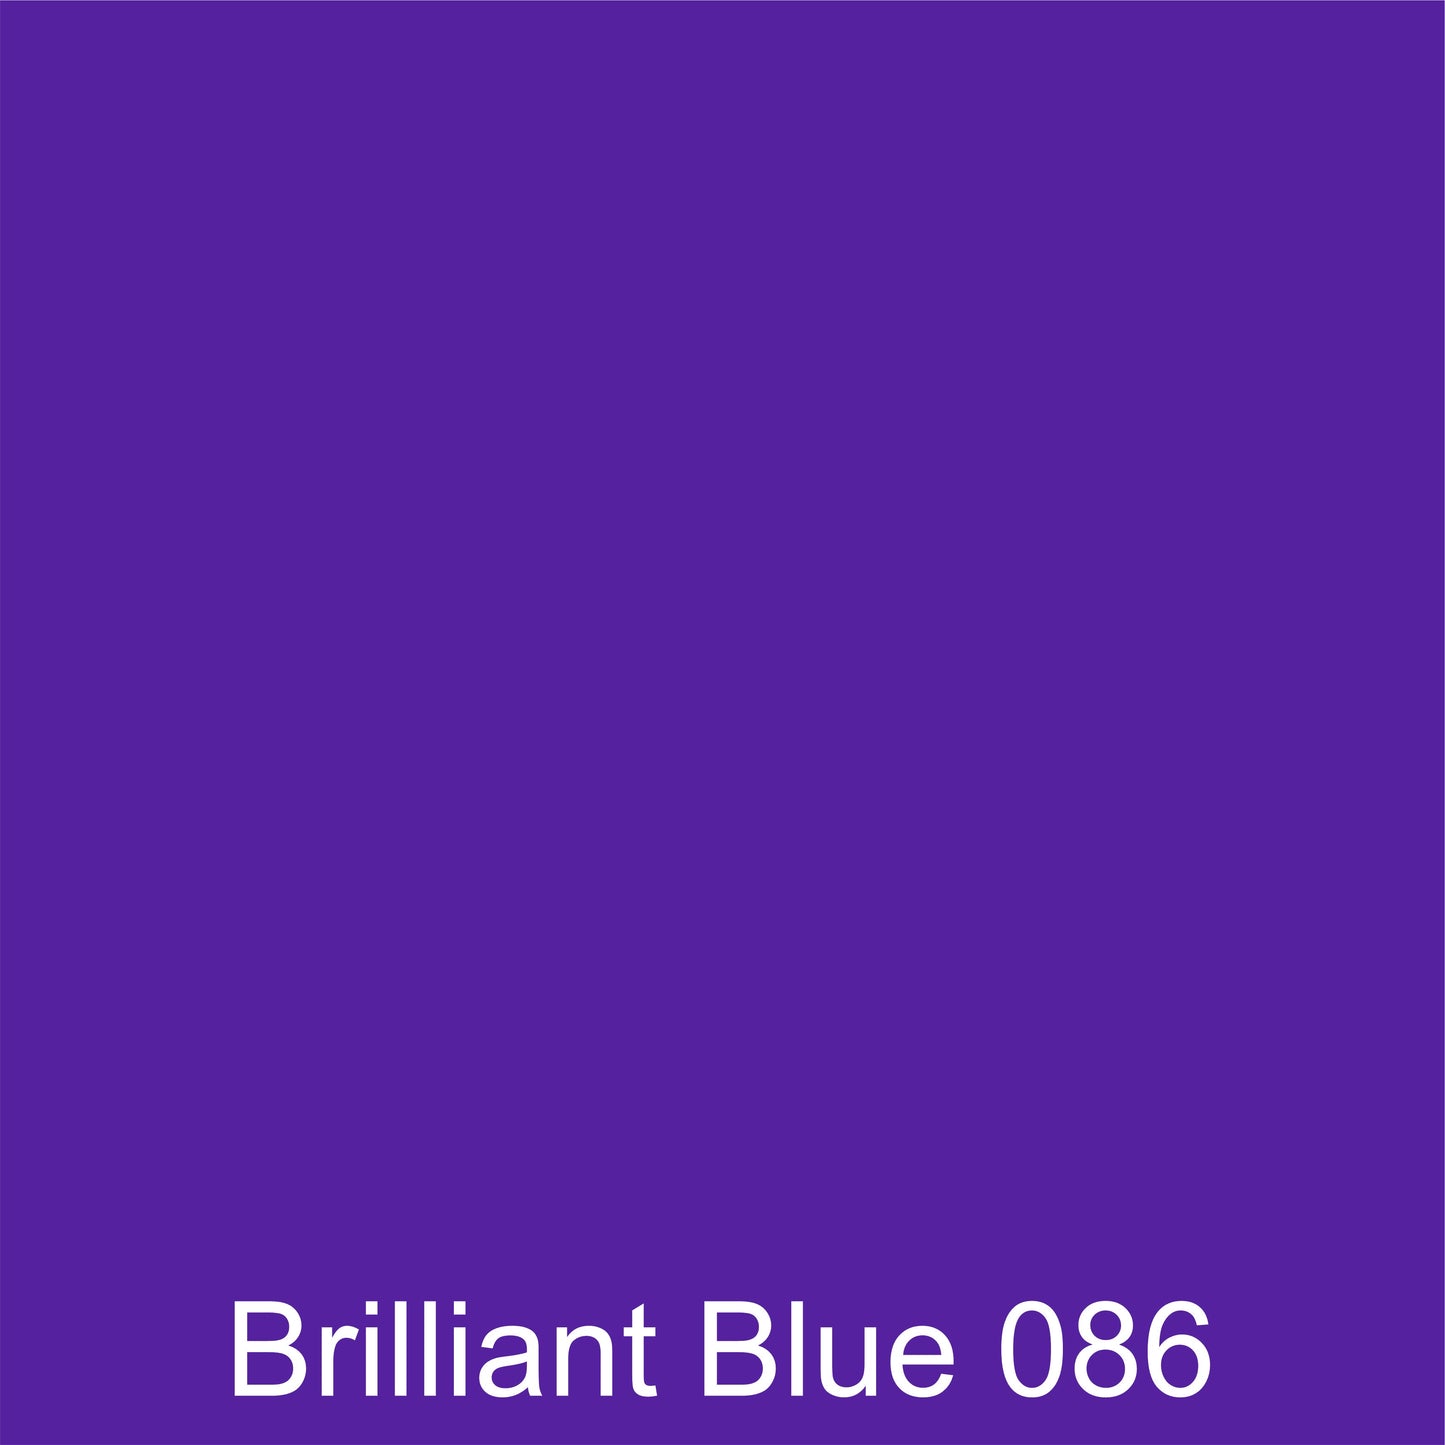 Oracal 651 Gloss :- Brilliant Blue - 086 - 300mm x 10 Metres